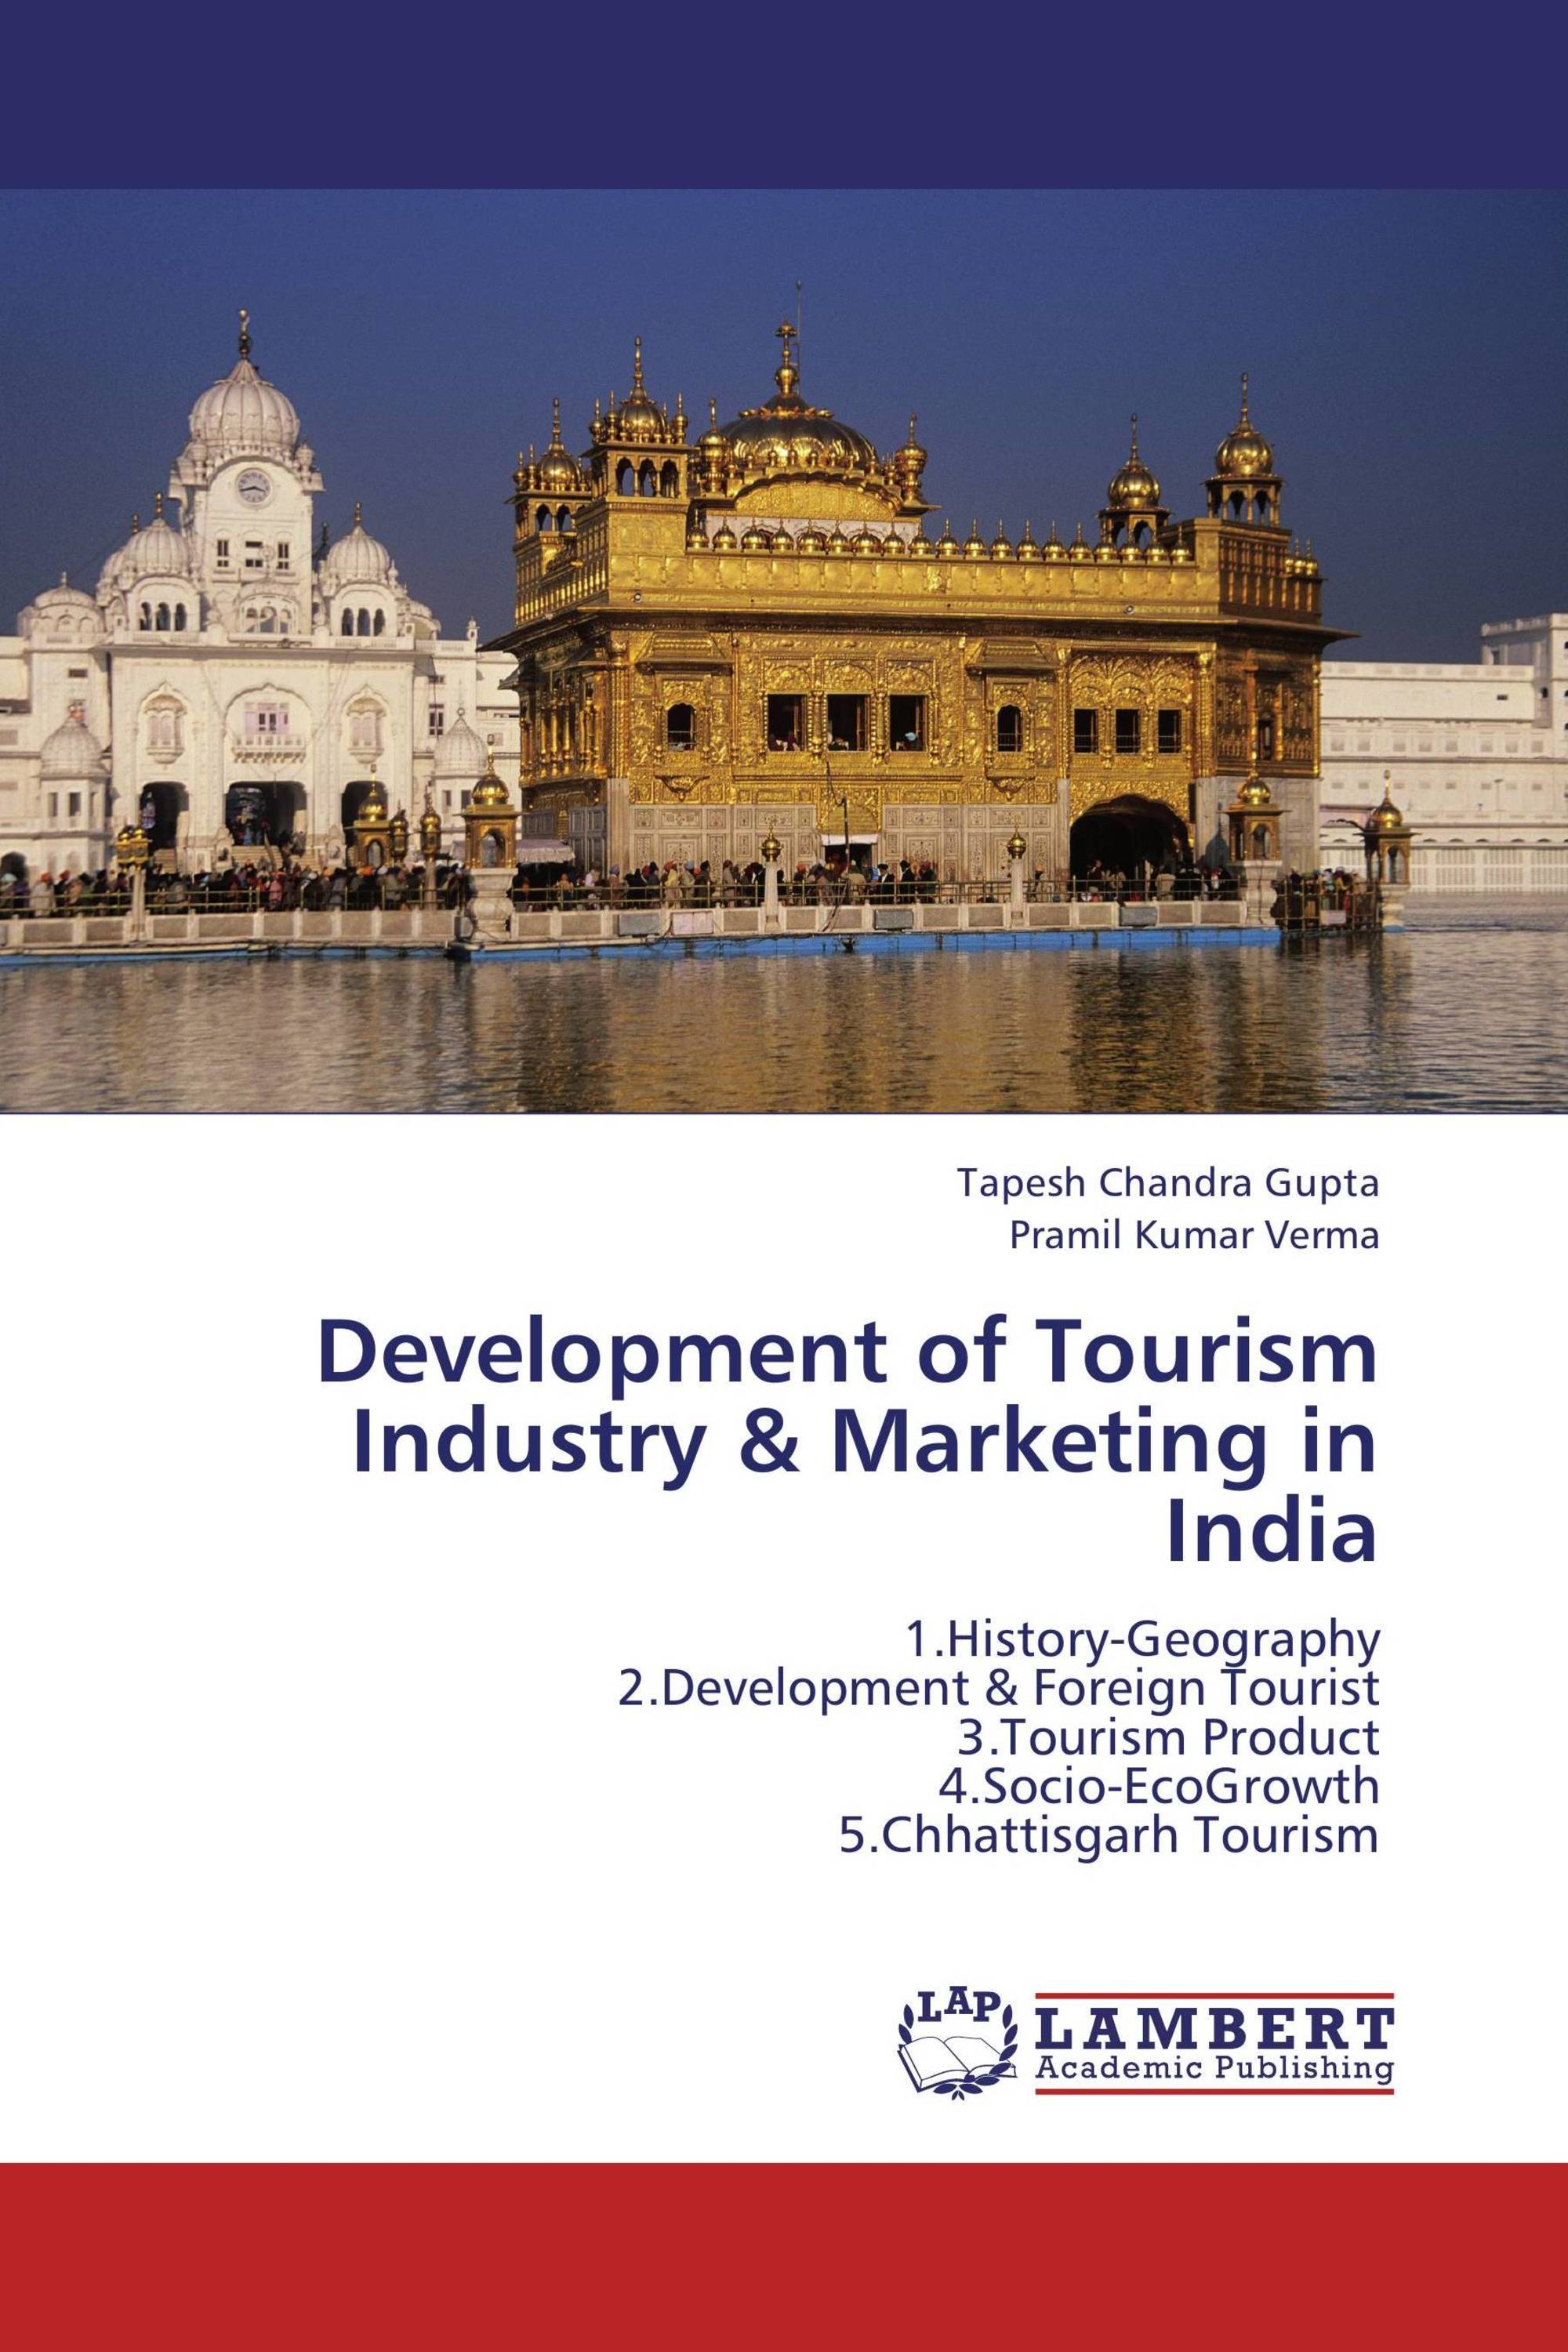 dissertation topics in tourism in india